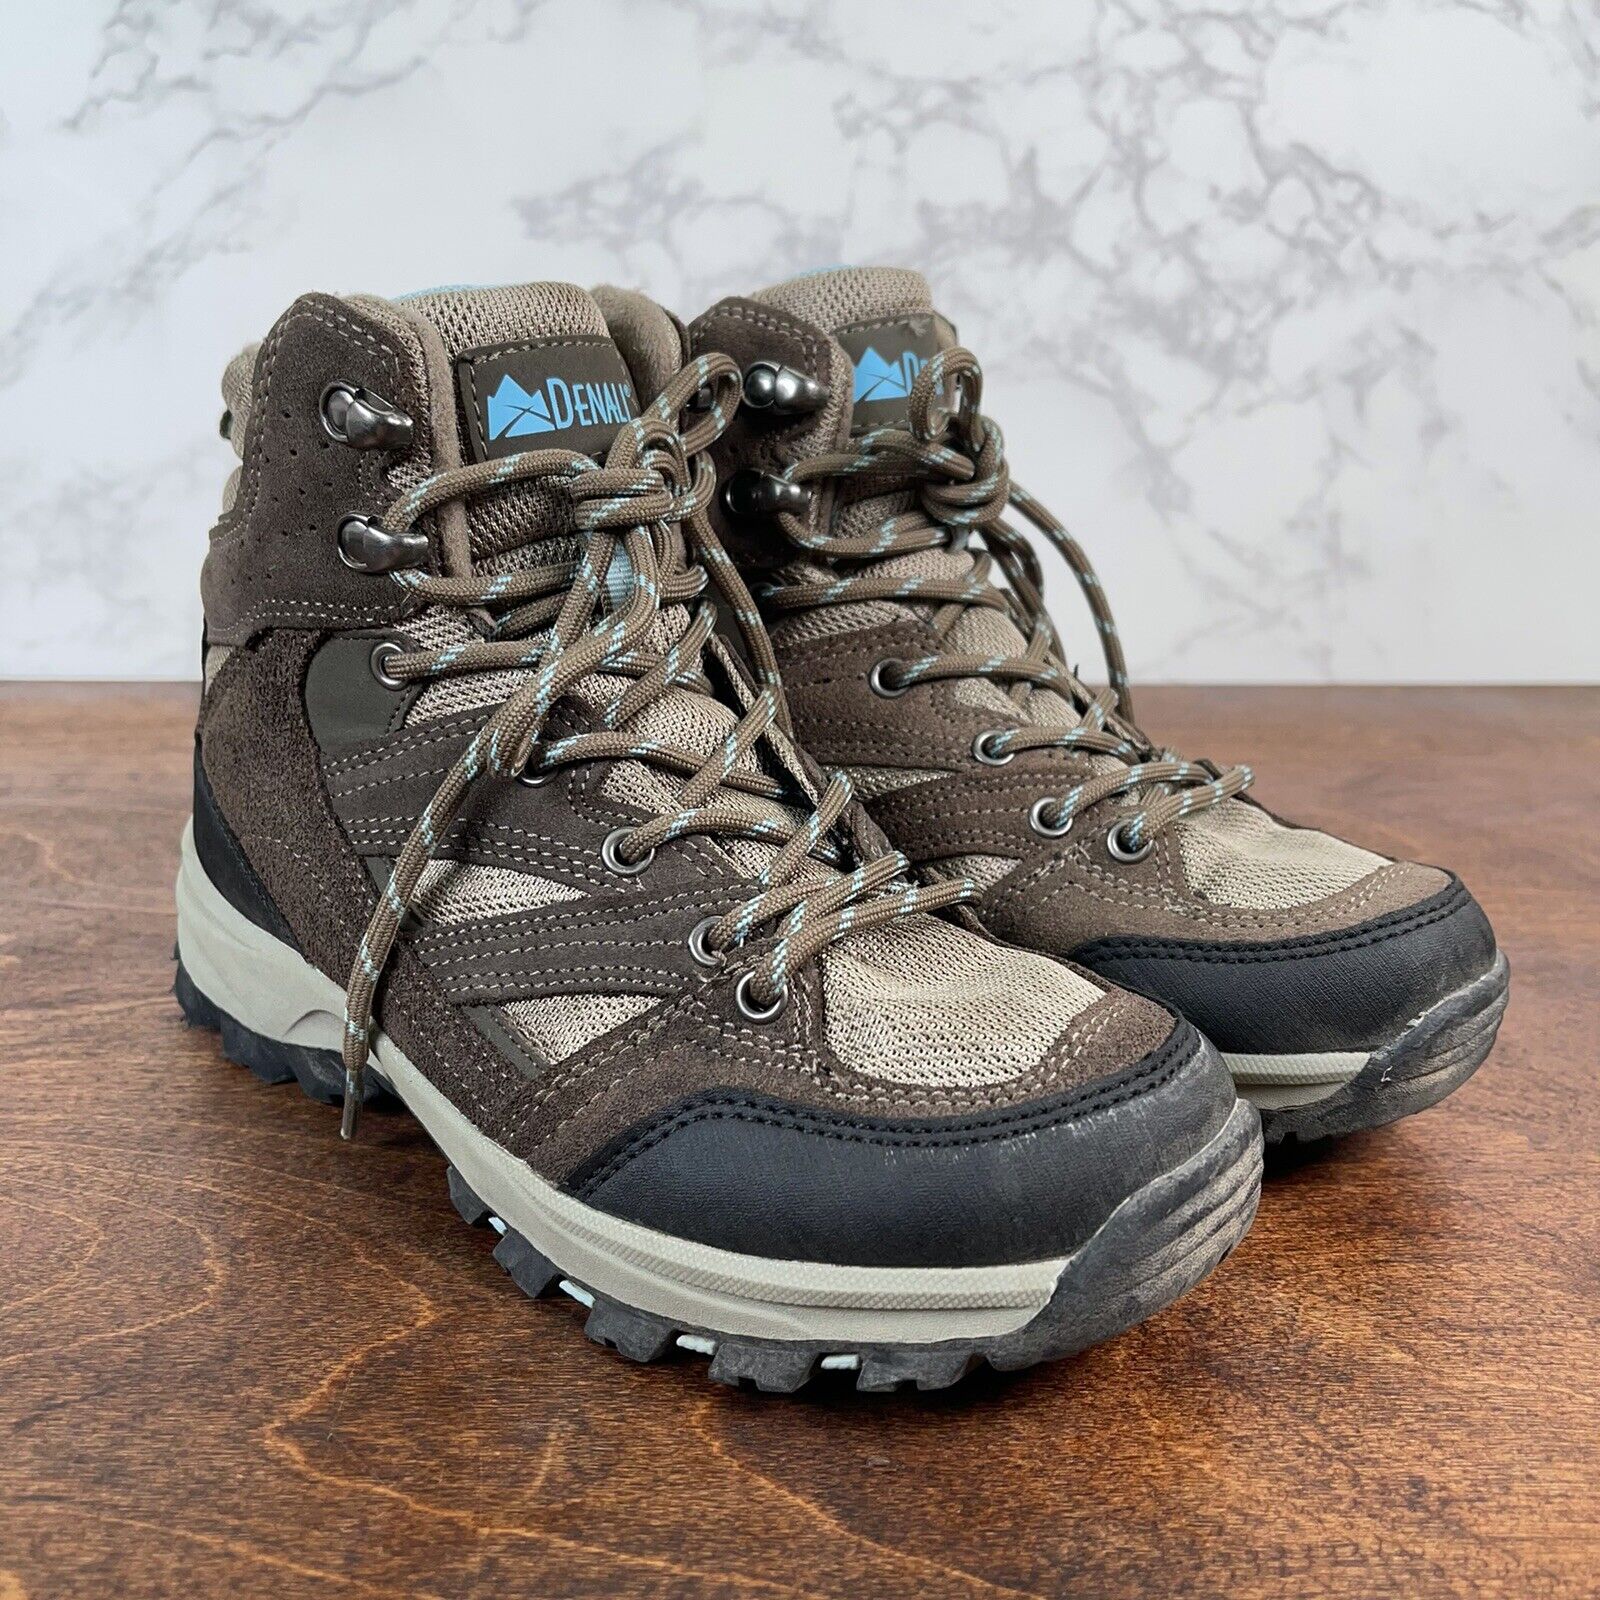 Denali Women's Trailblazer Hiking Boots Sz 5.5 Brown/Black w/Light Blue Accents